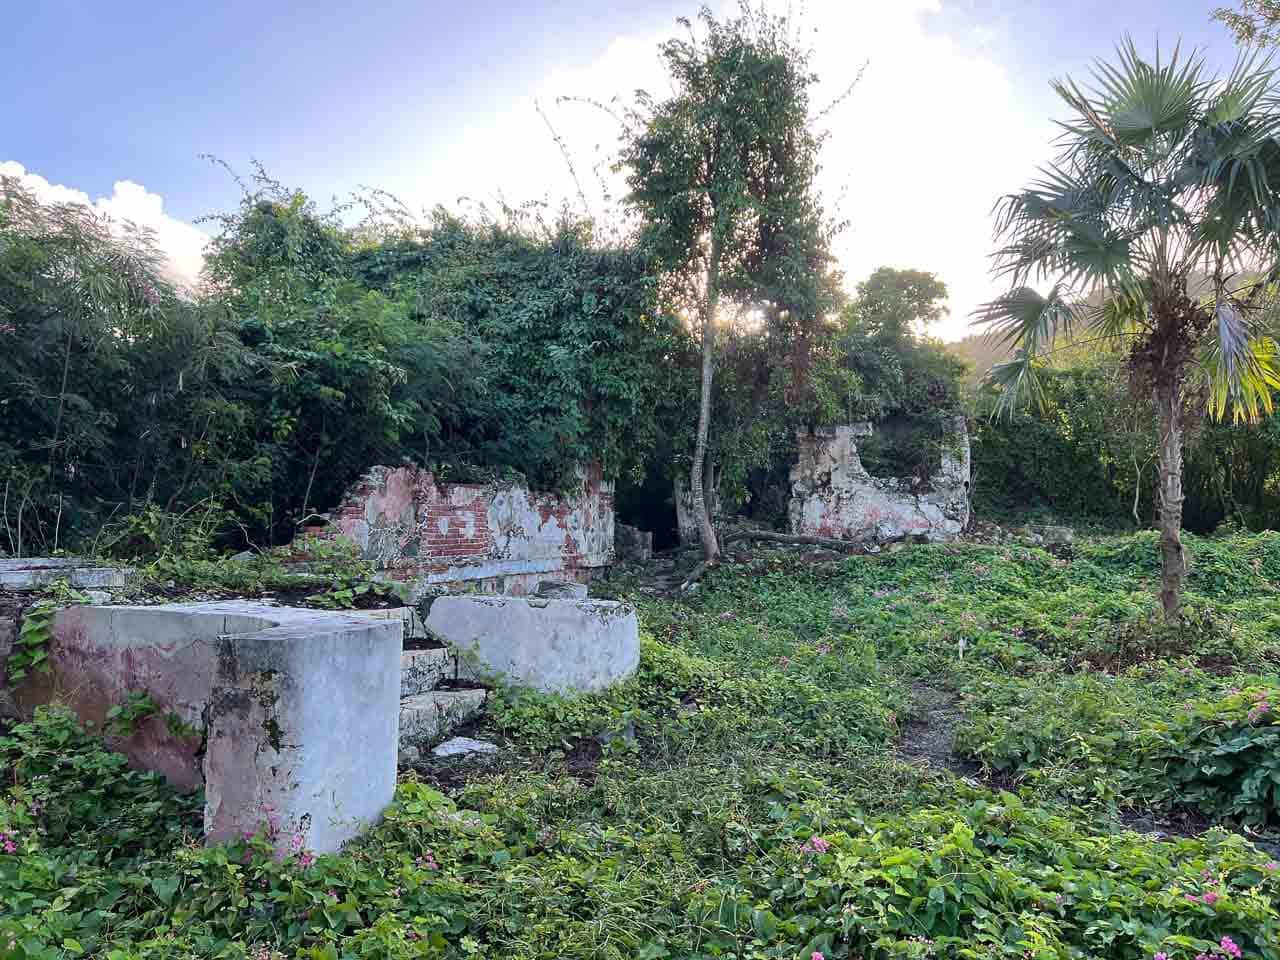 America Hill Ruins on the Cinnamon Bay Trail, Virgin Islands National Park